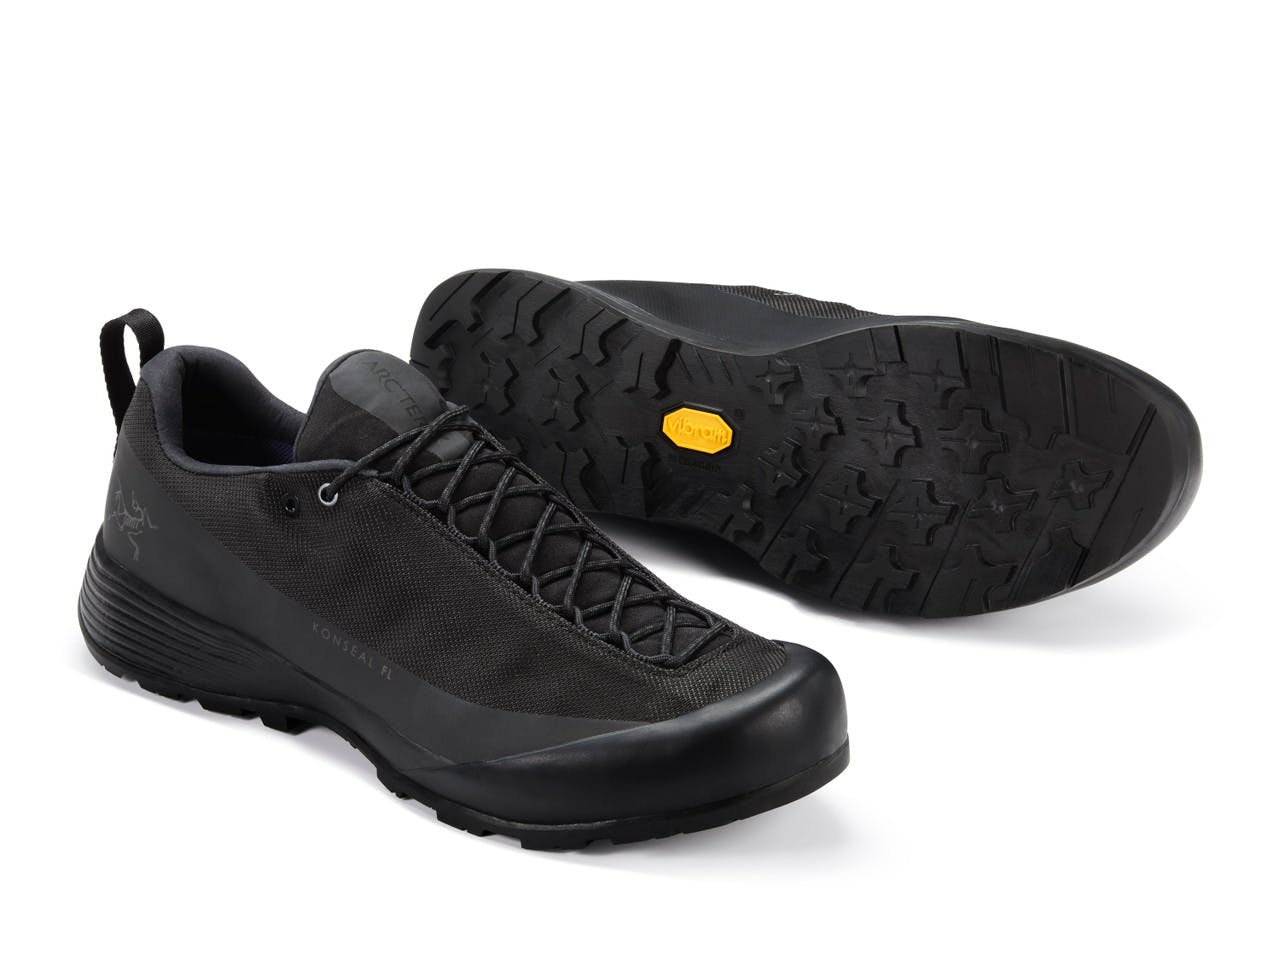 Konseal FL 2 Gore-Tex Approach Shoes Black/Carbon Copy